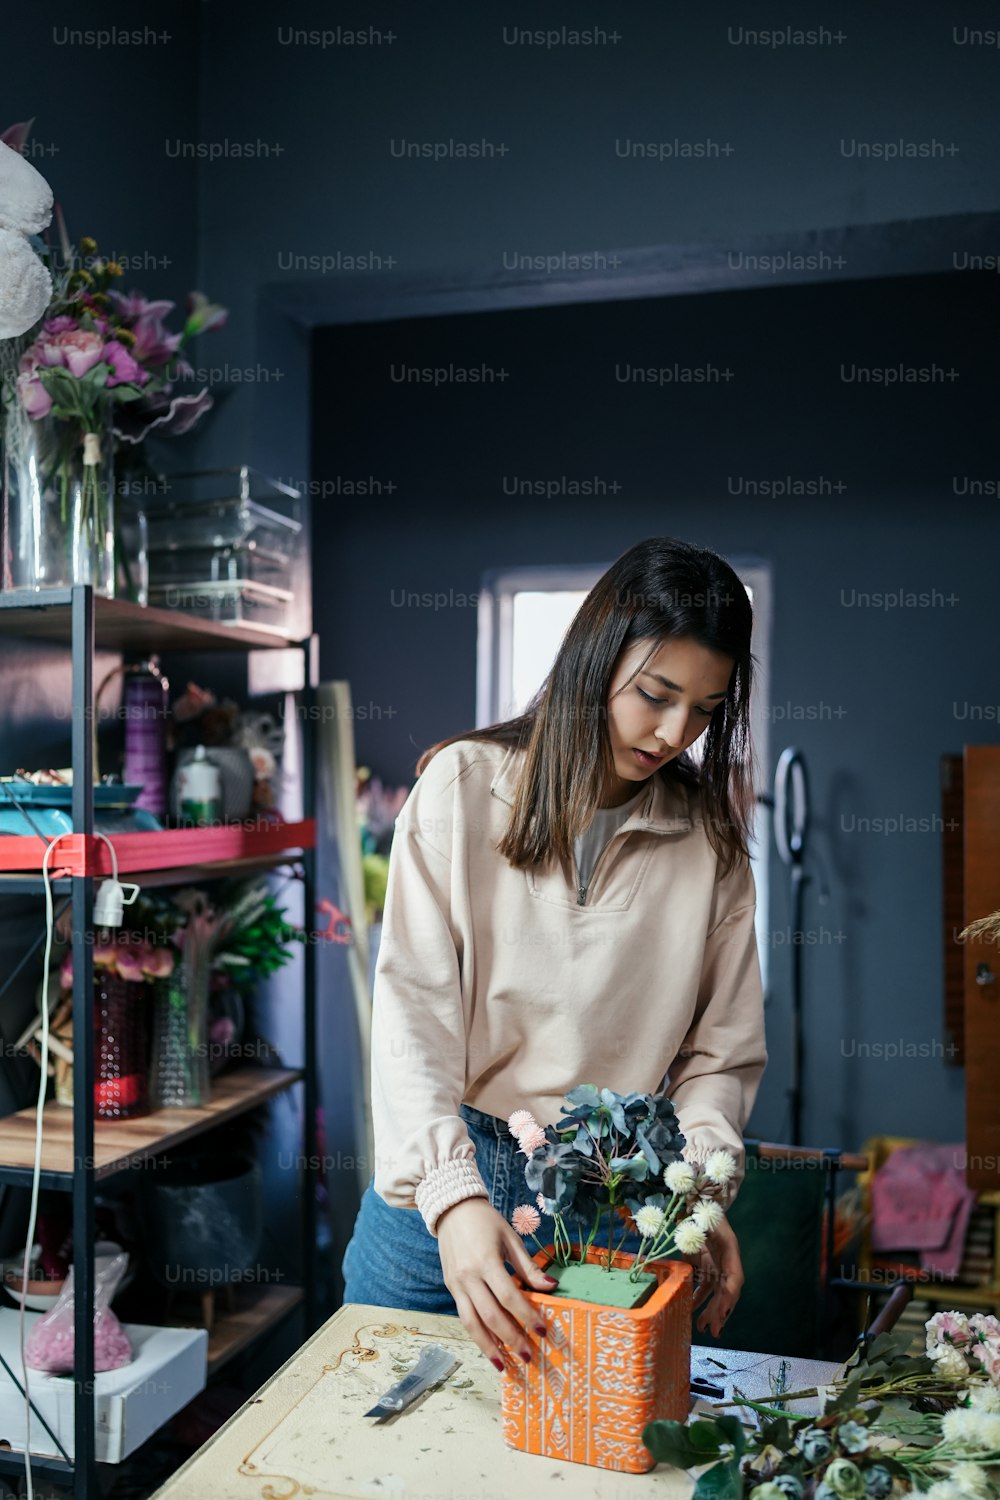 a woman arranging flowers in a flower shop